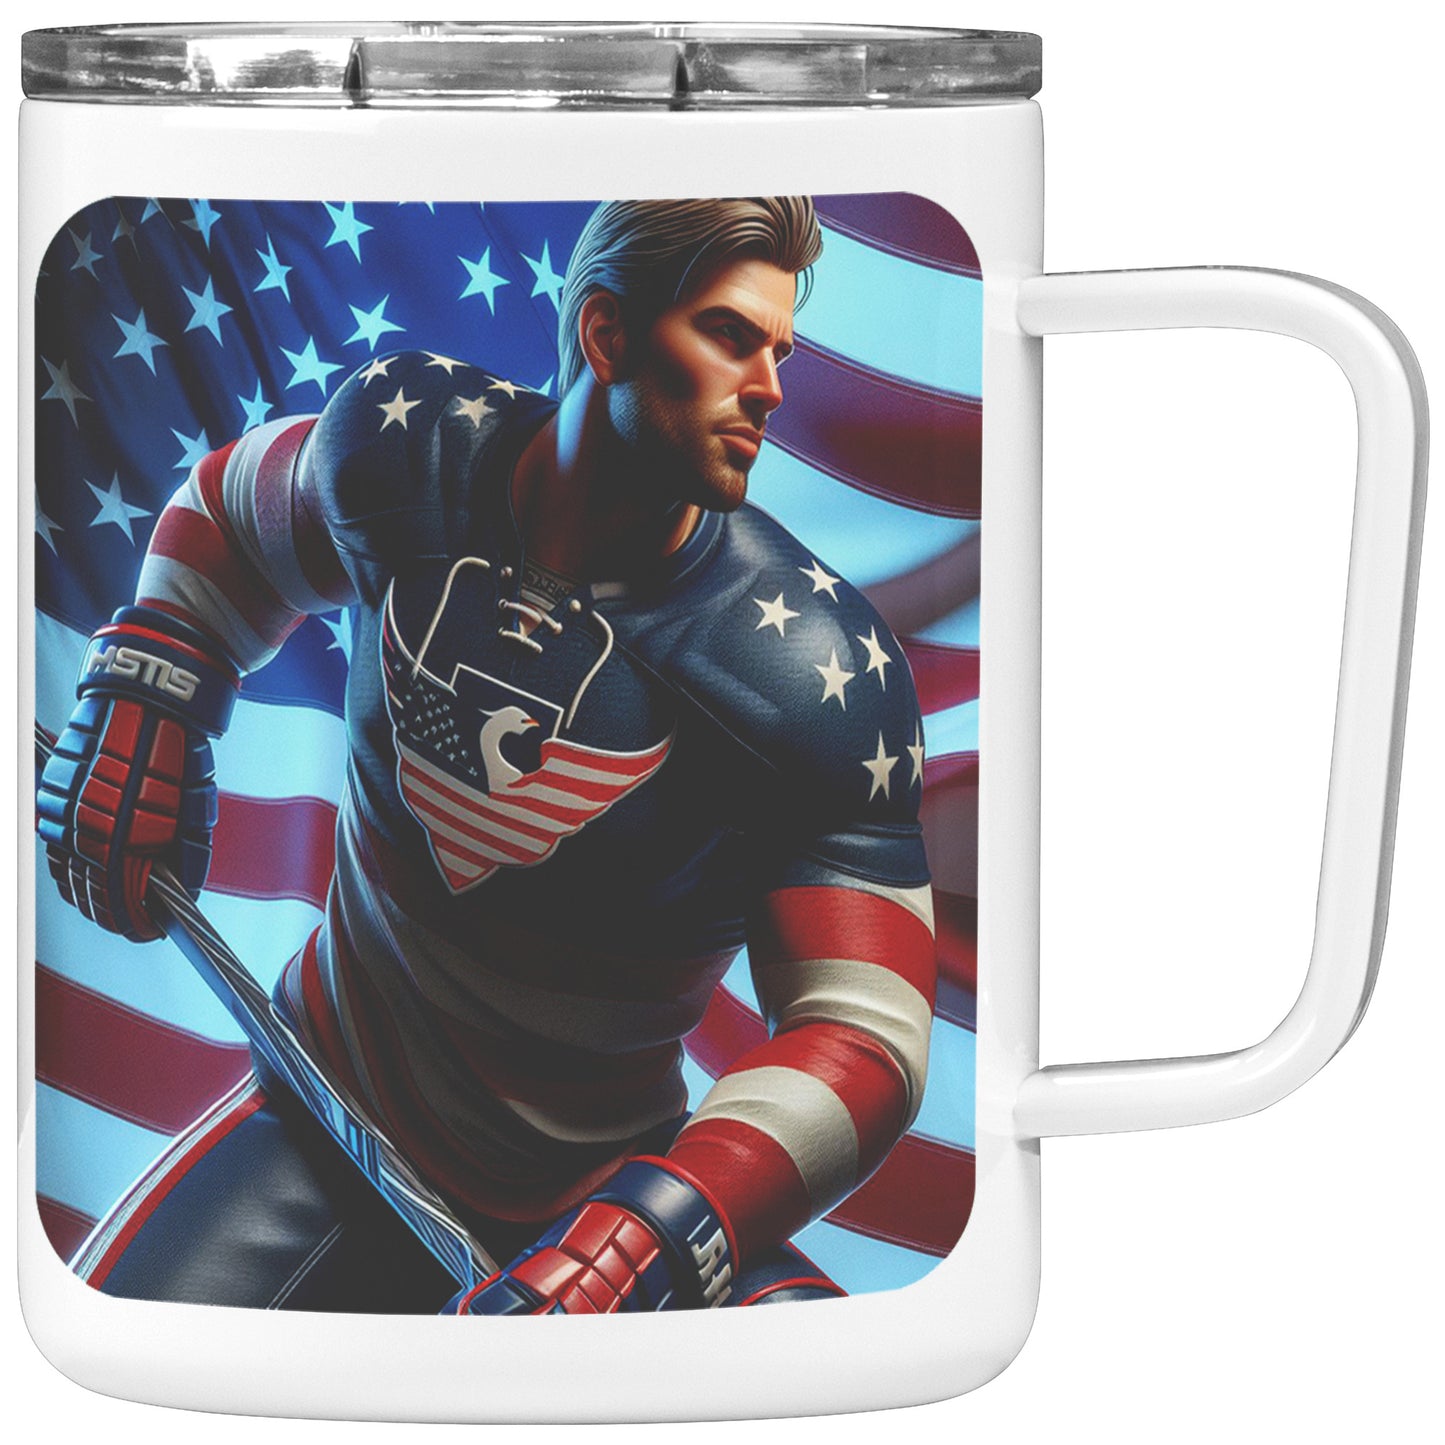 Man Ice Hockey Player - Coffee Mug #17